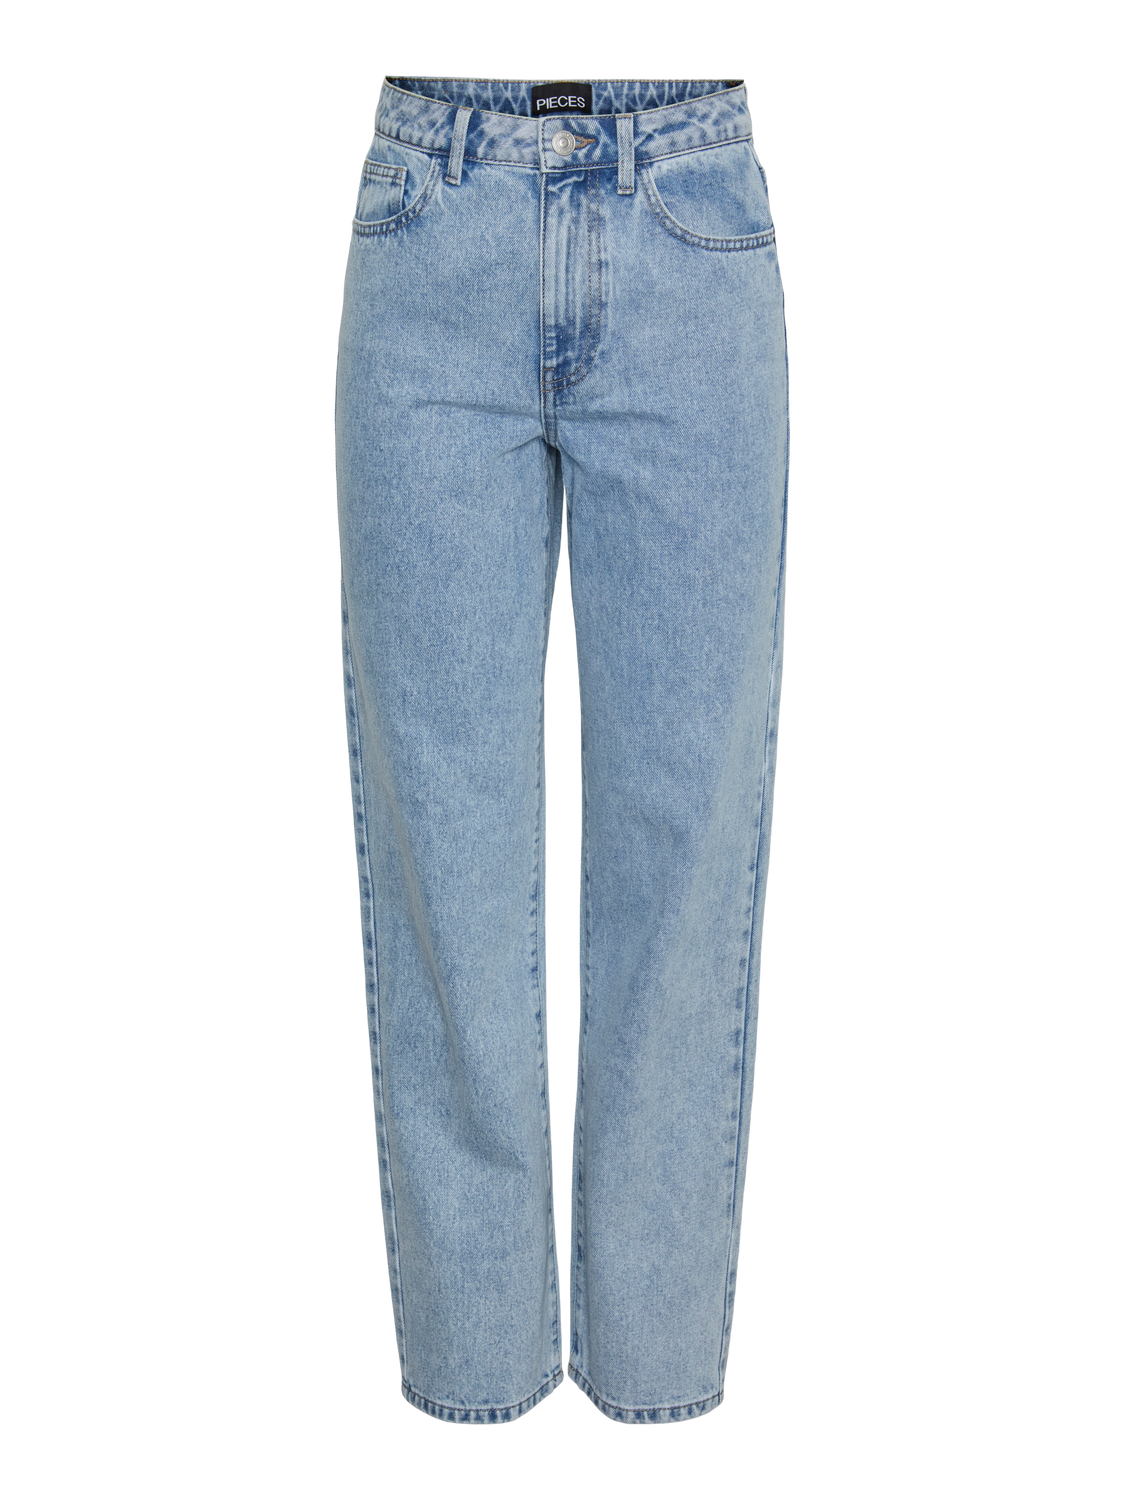 PCOYA Jeans - Blue Denim